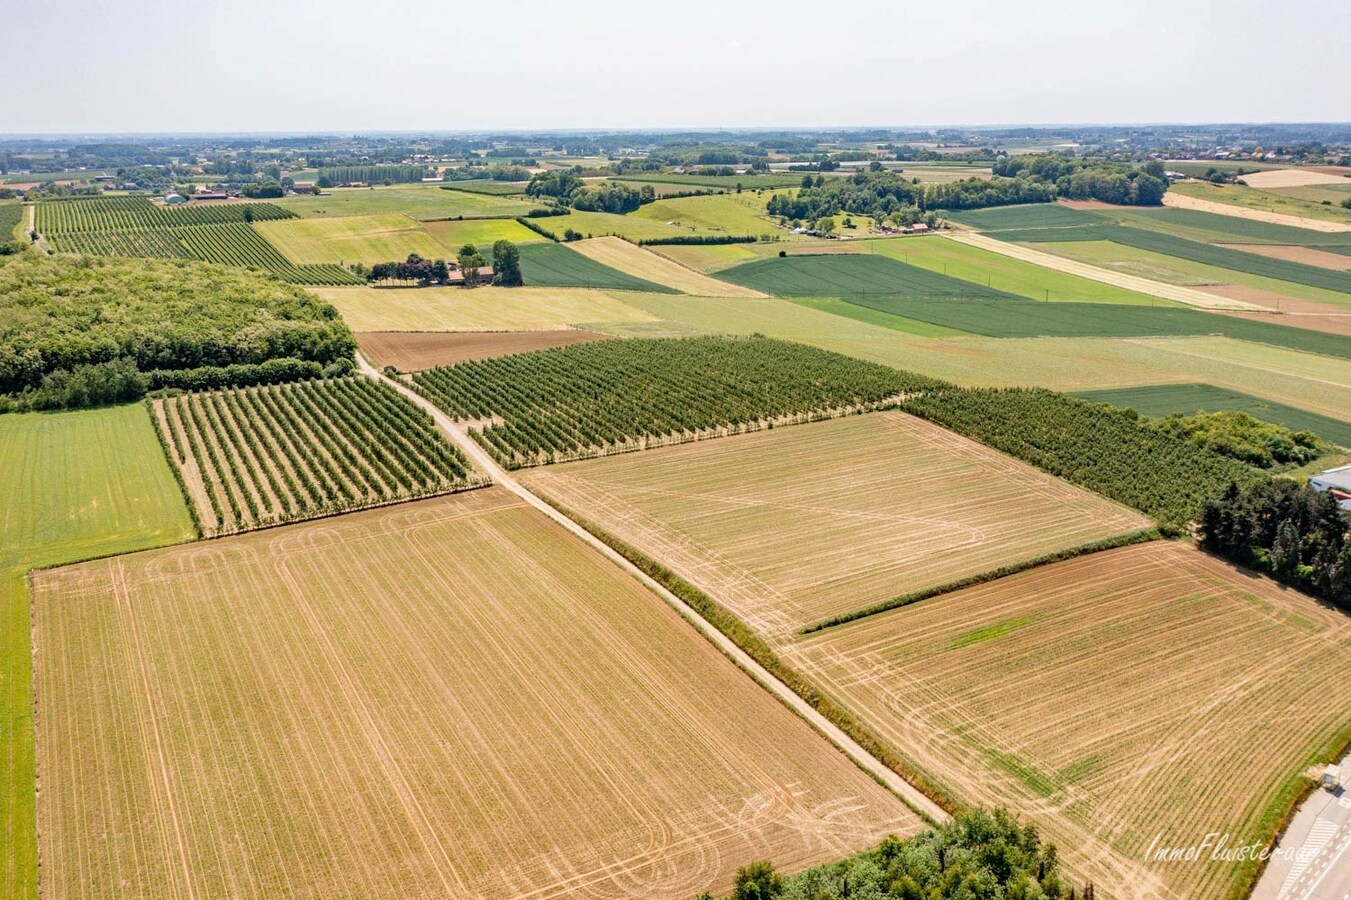 Landbouwgrond op ca. 5ha te Tielt-Winge (Vlaams-Brabant) 